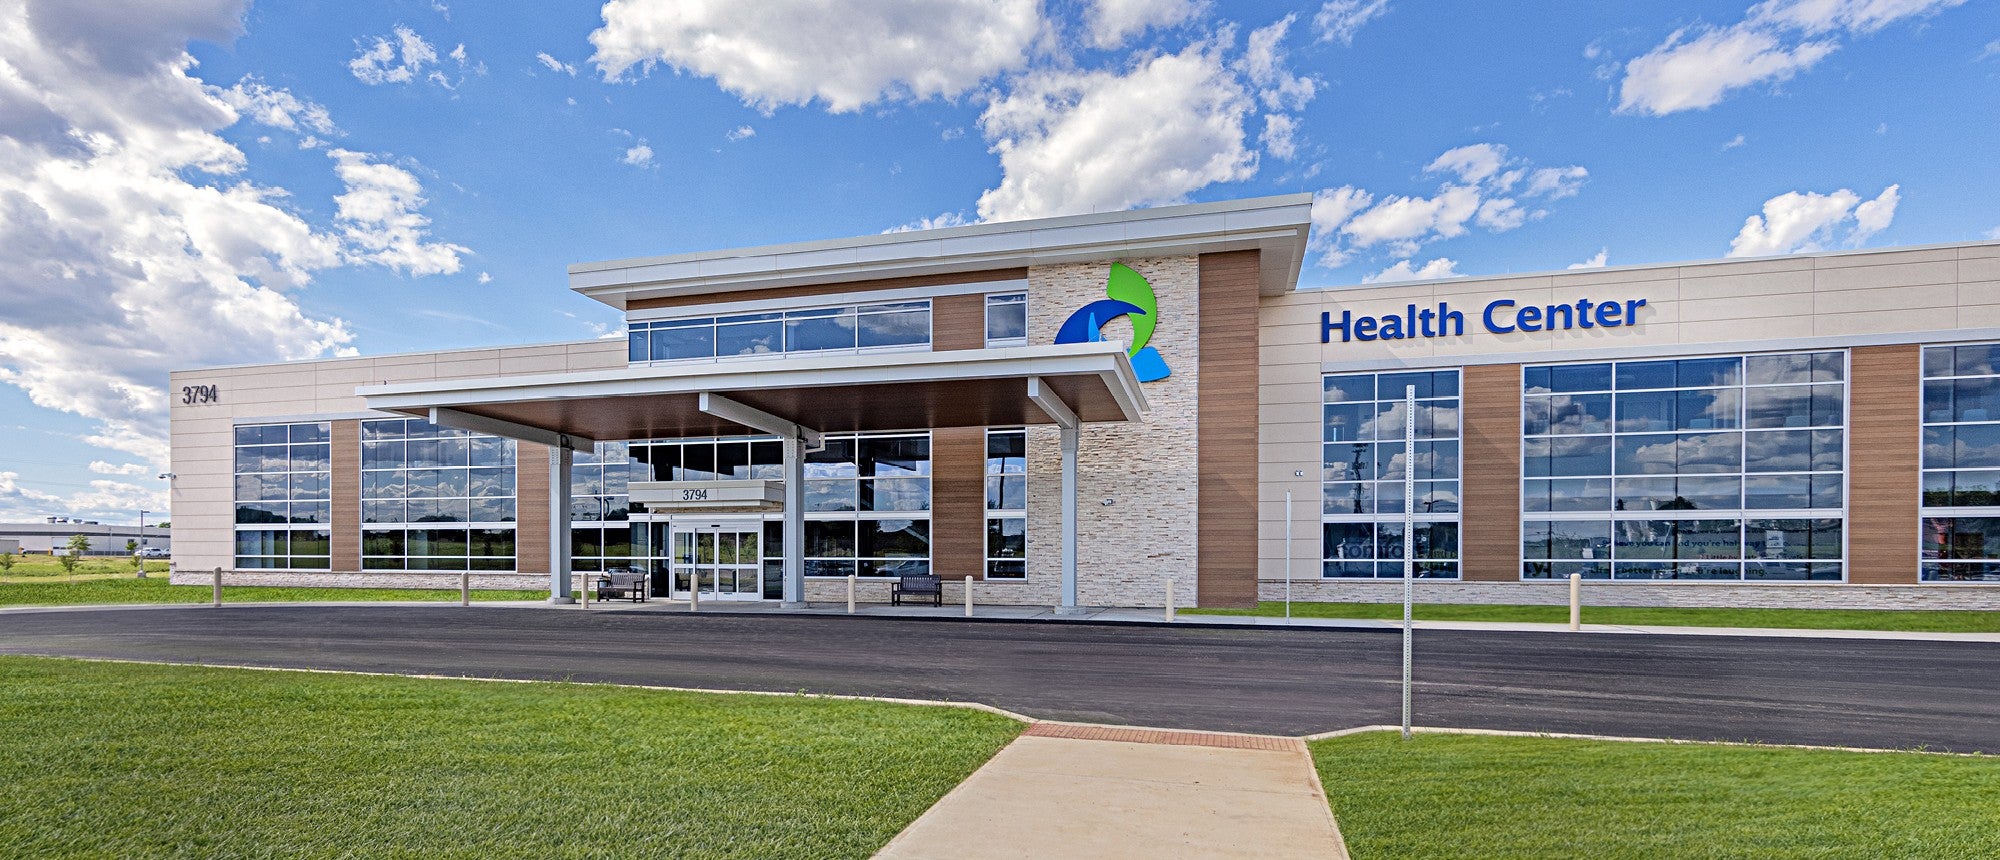 Health Center at Hecktown Oaks